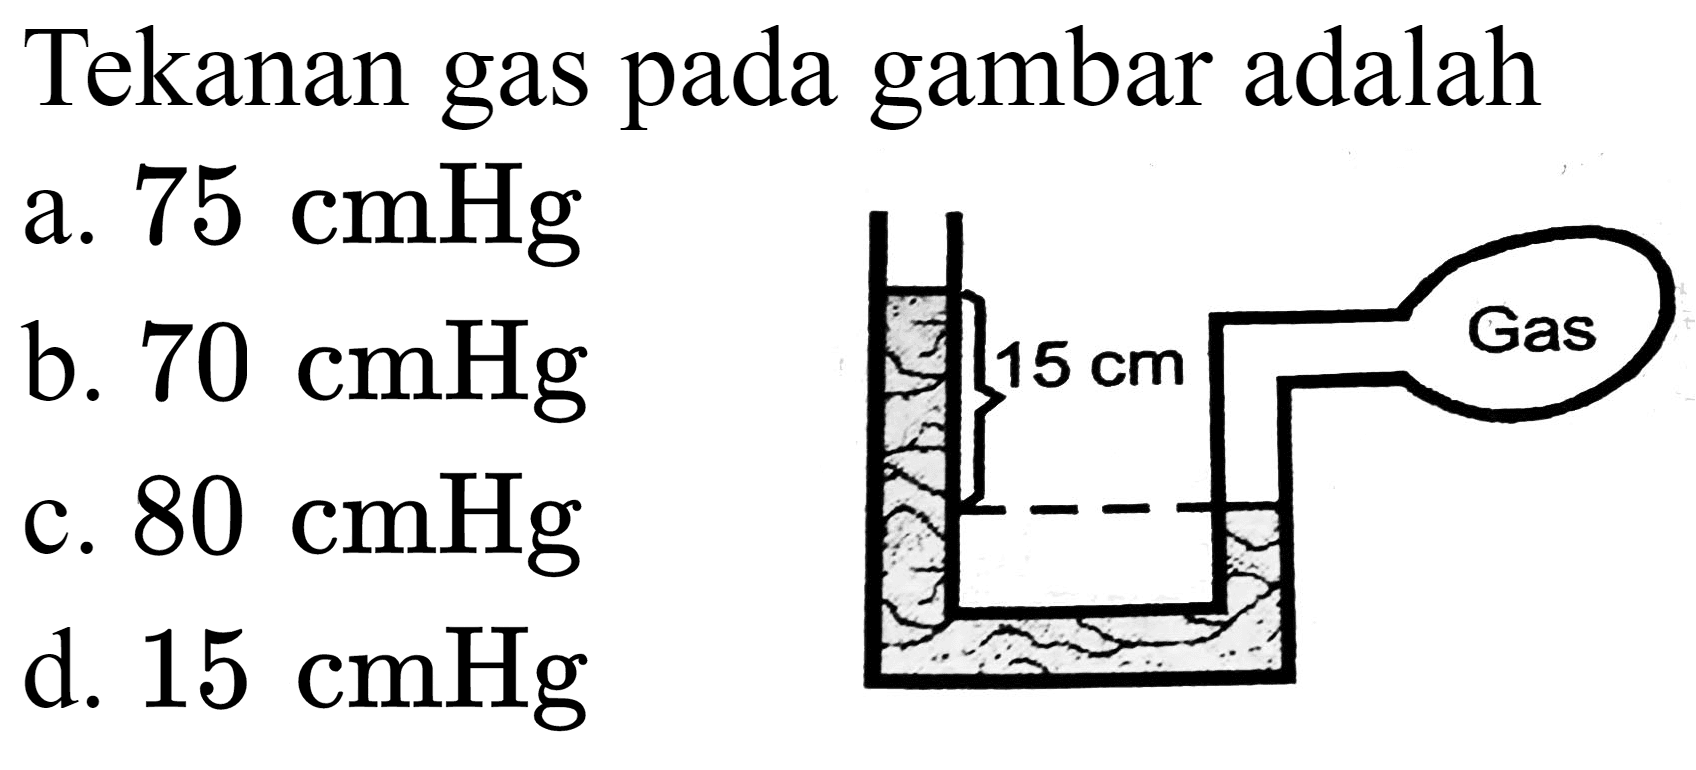 Tekanan gas pada gambar adalah
a.  75 cmHg 
b.  70 cmHg 
c.  80 cmHg 
d.  15 cmHg 